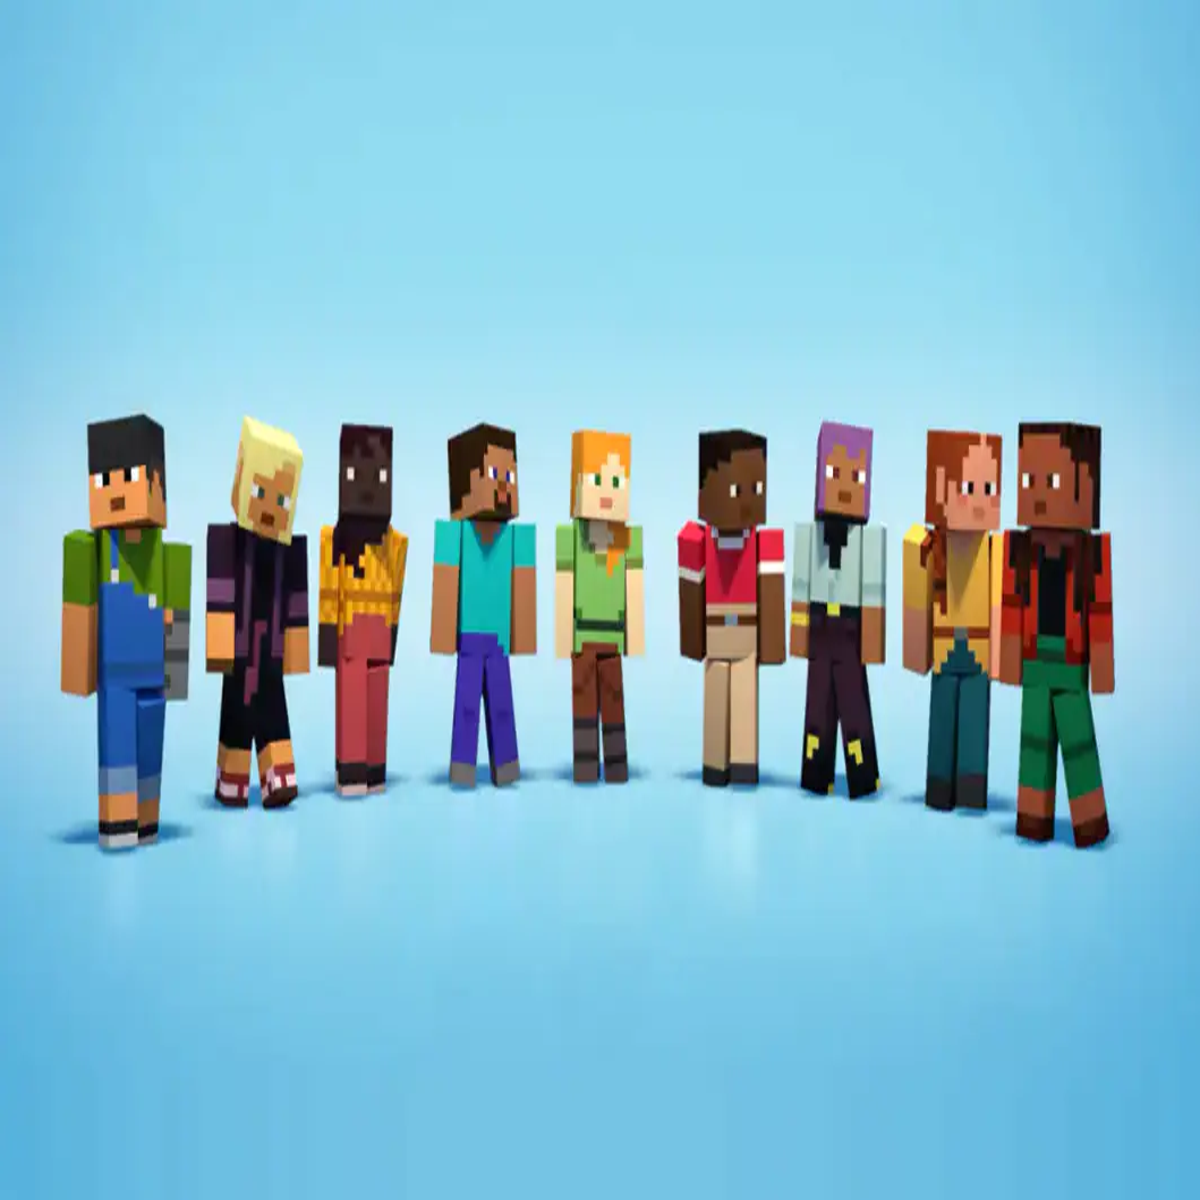 Even More Minecraft Skins Revealed